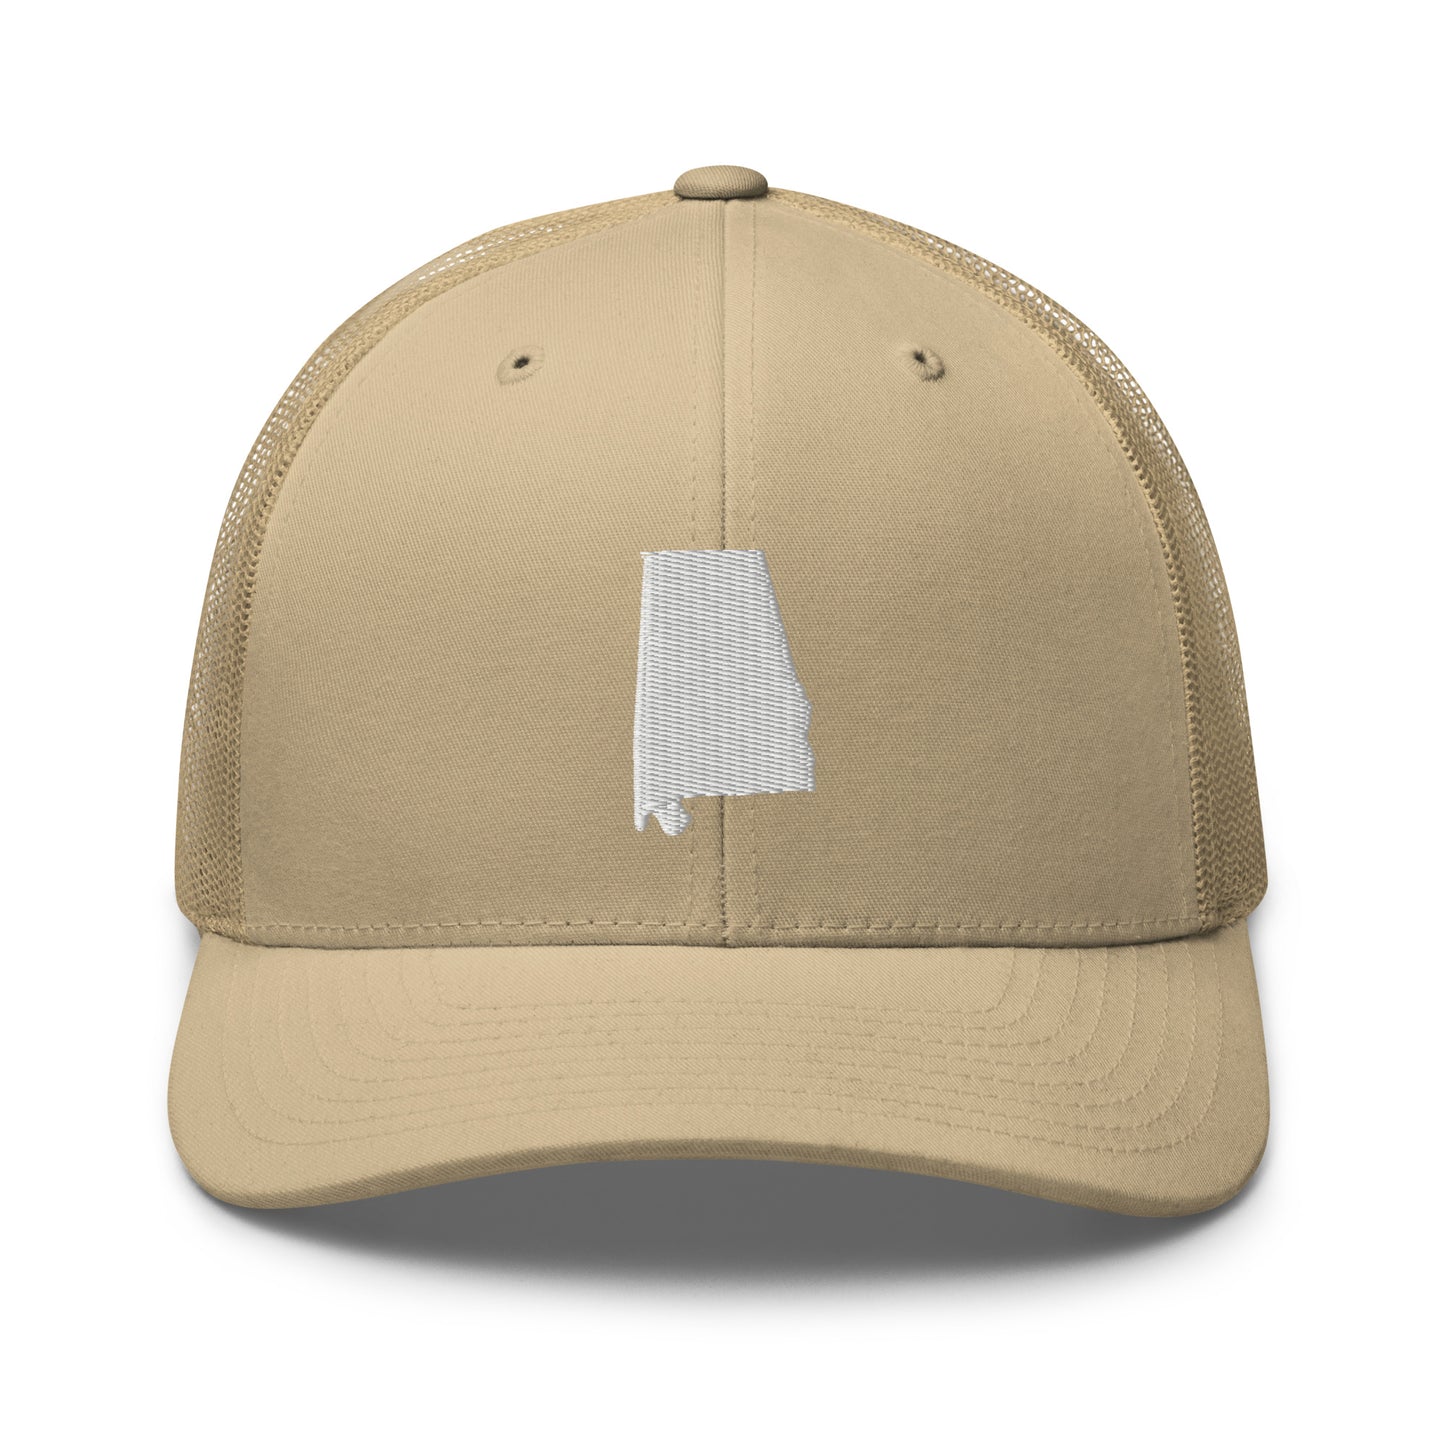 Alabama State Silhouette Mid 6 Panel Snapback Trucker Hat